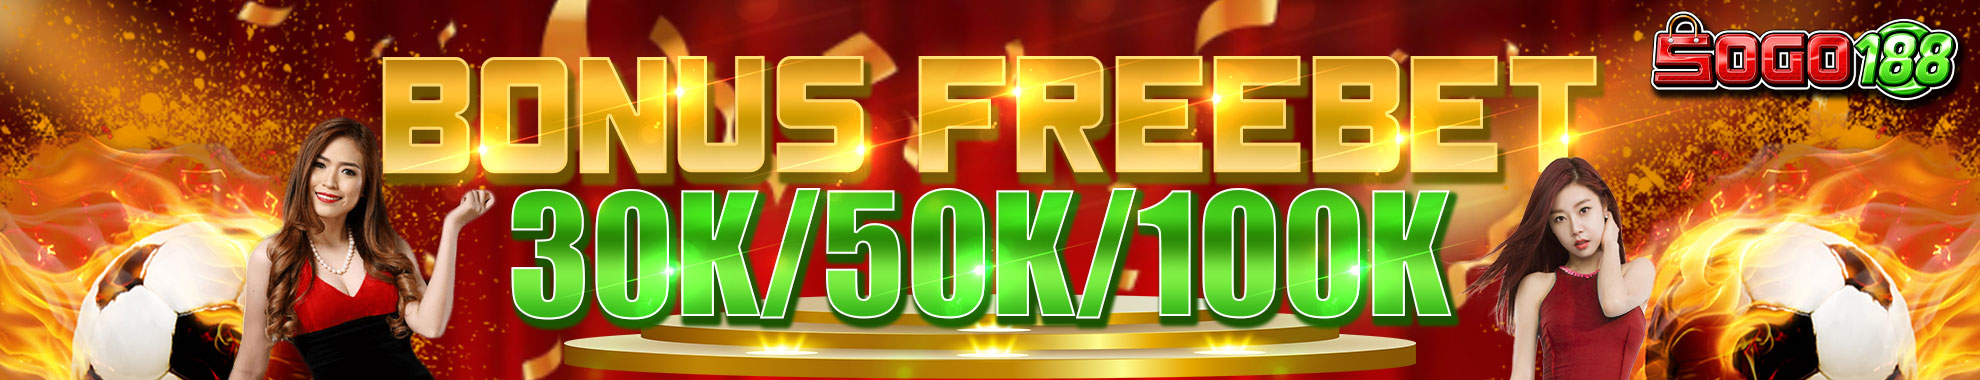 BONUS FREEBET 30K/50K/100K